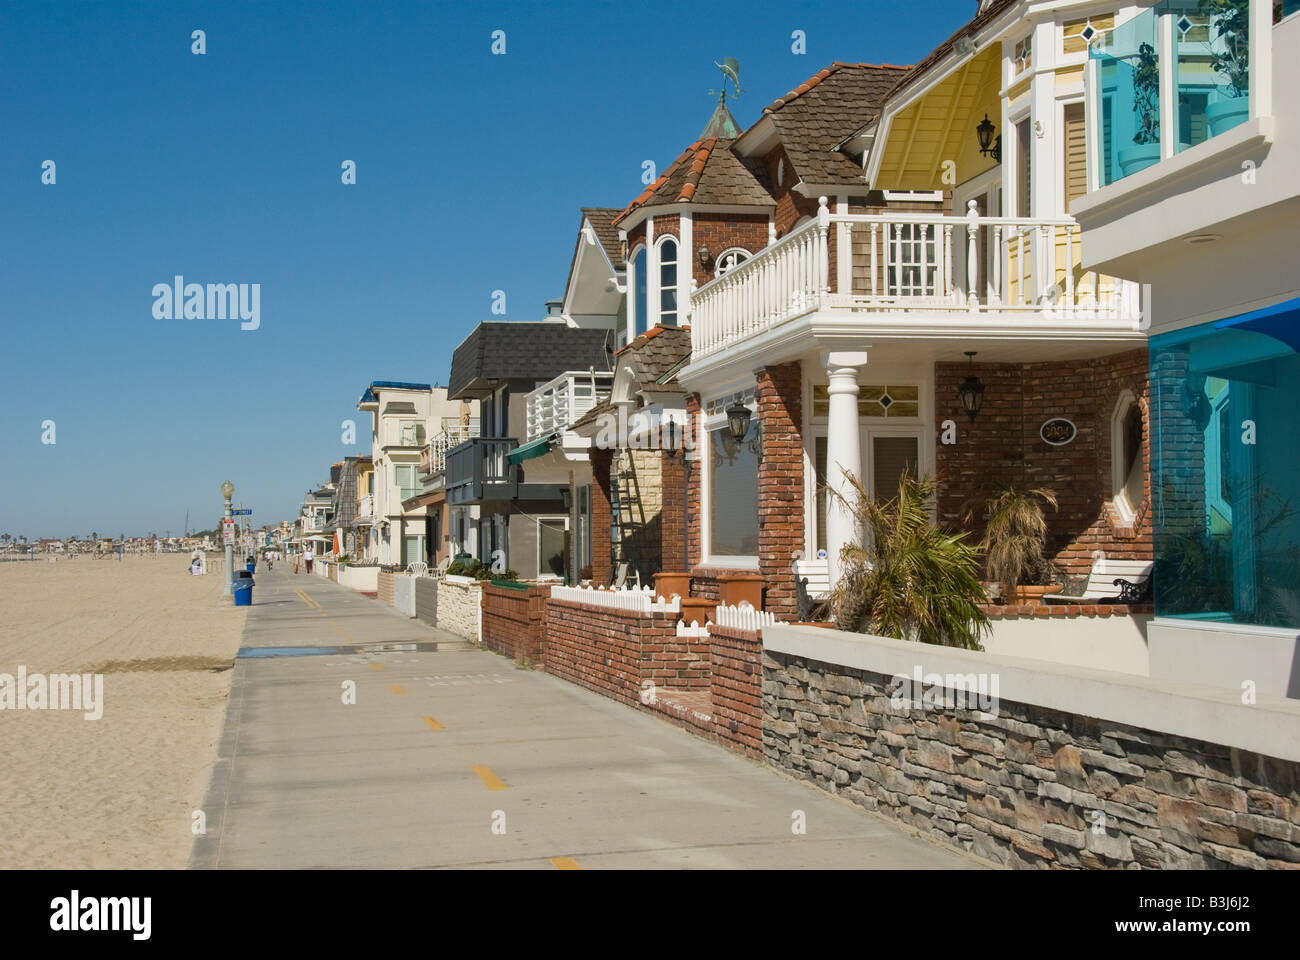 balboa peninsula strand newport beach, orange county, california, ca usa three miles 5 km long, california Stock Photo